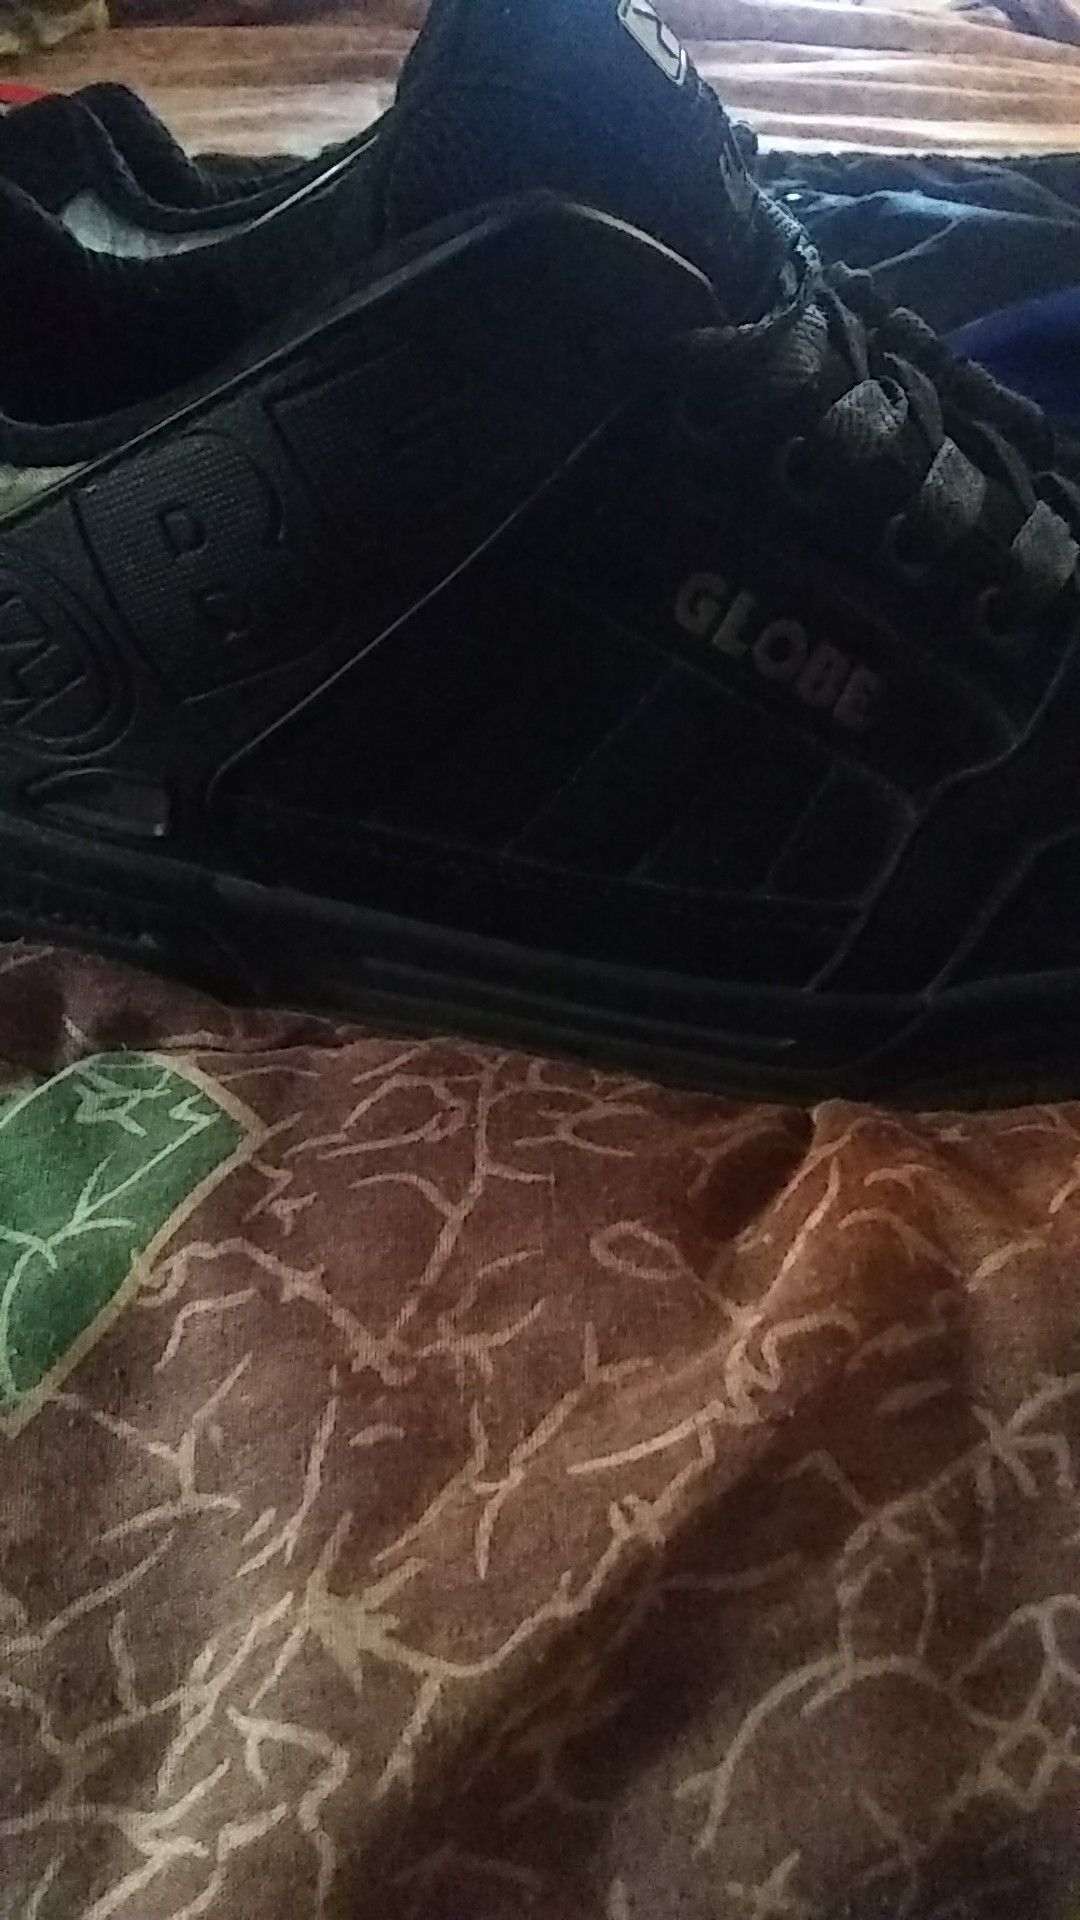 Globe skate shoes